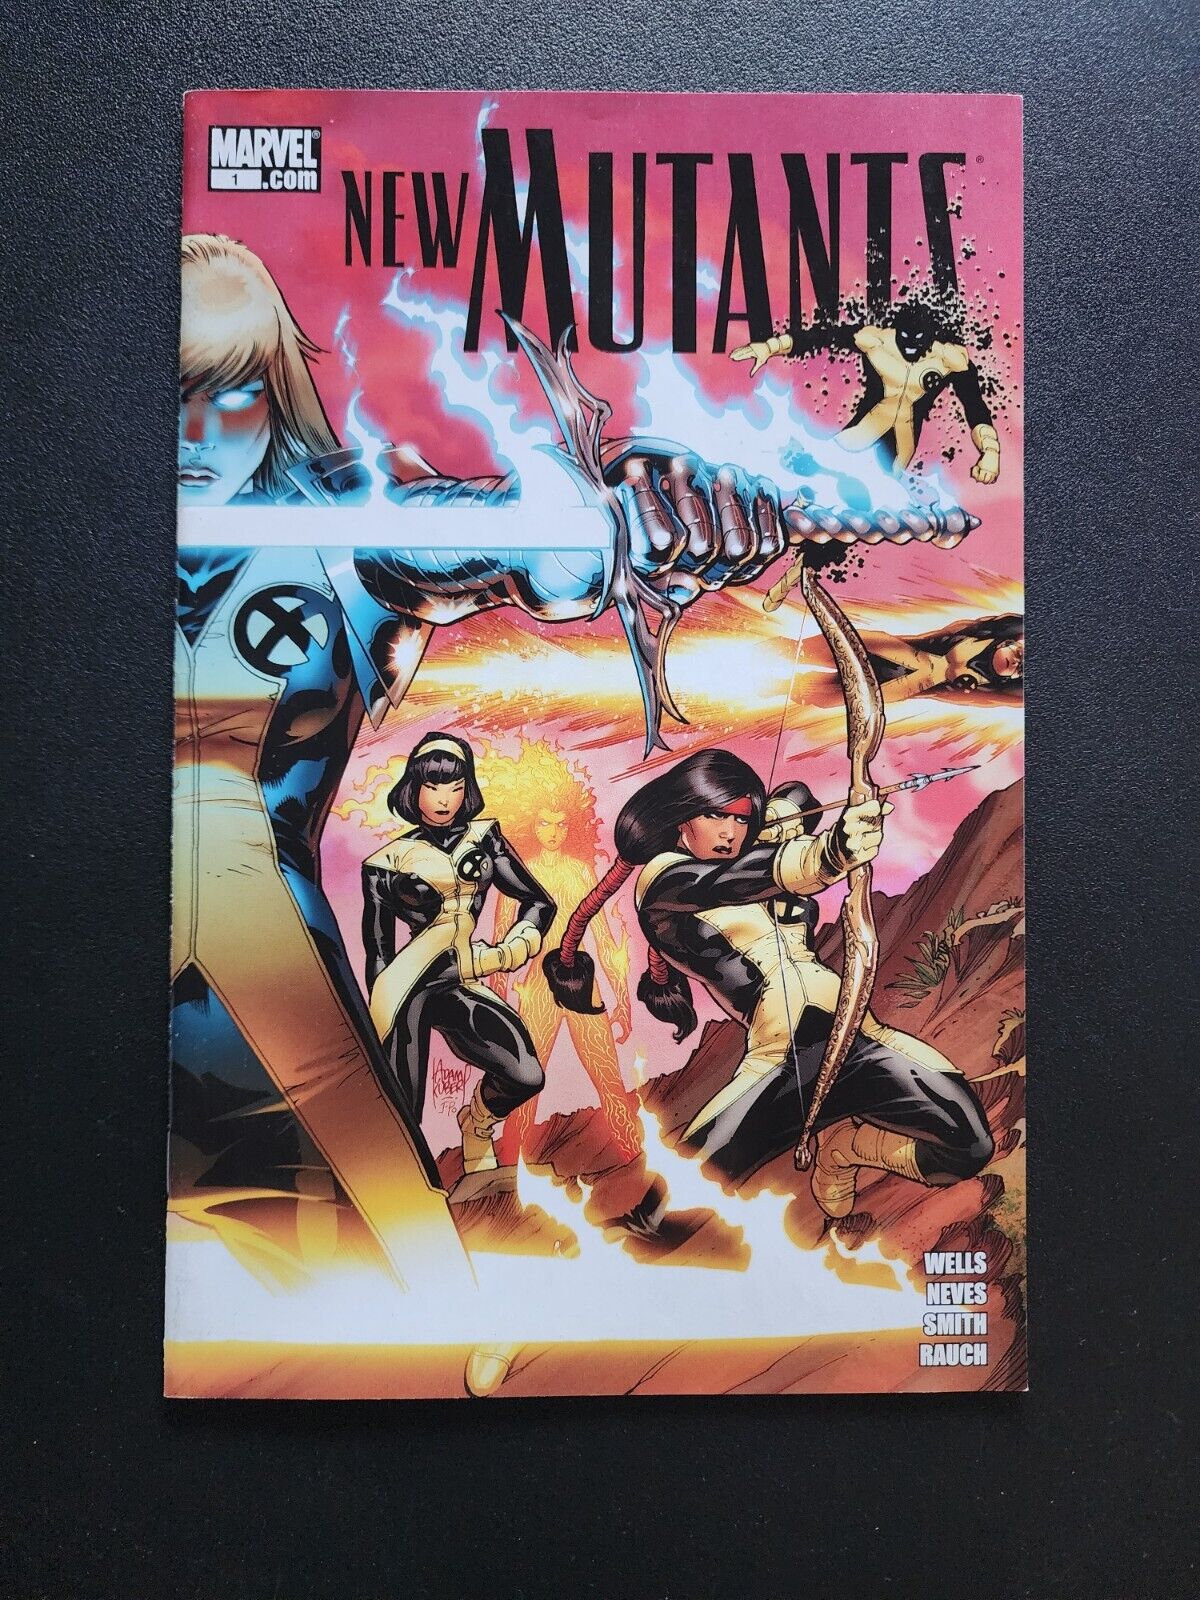 Marvel Comics New Mutants #1 July 2009 Adam Kubert Cover